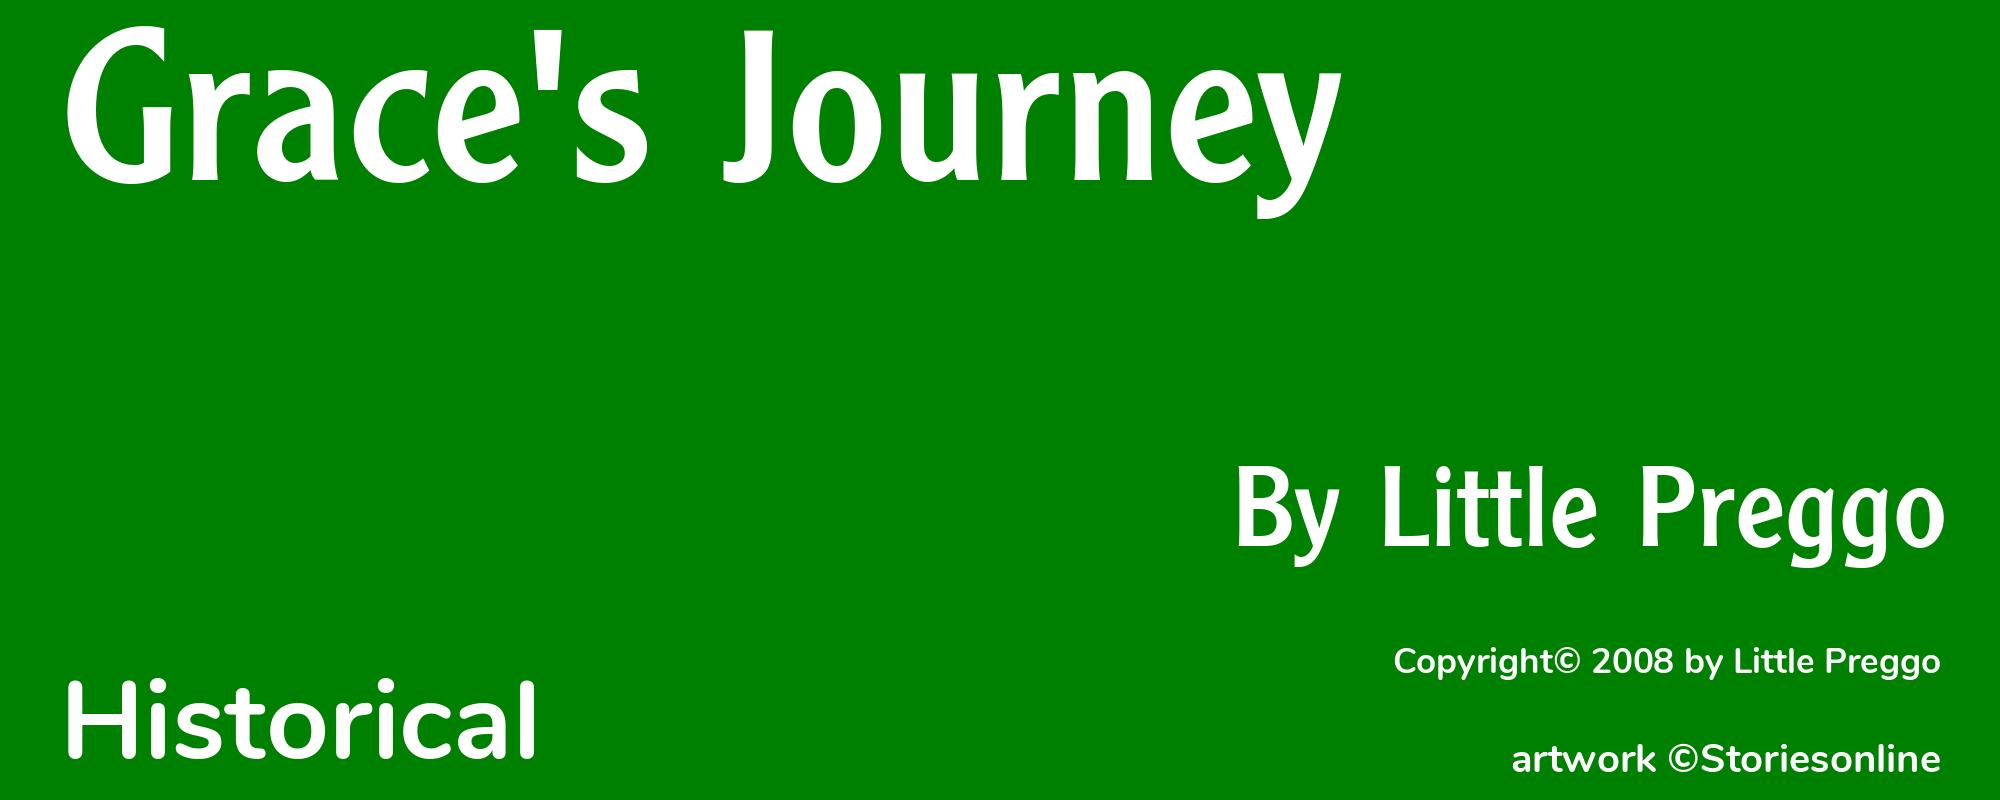 Grace's Journey - Cover